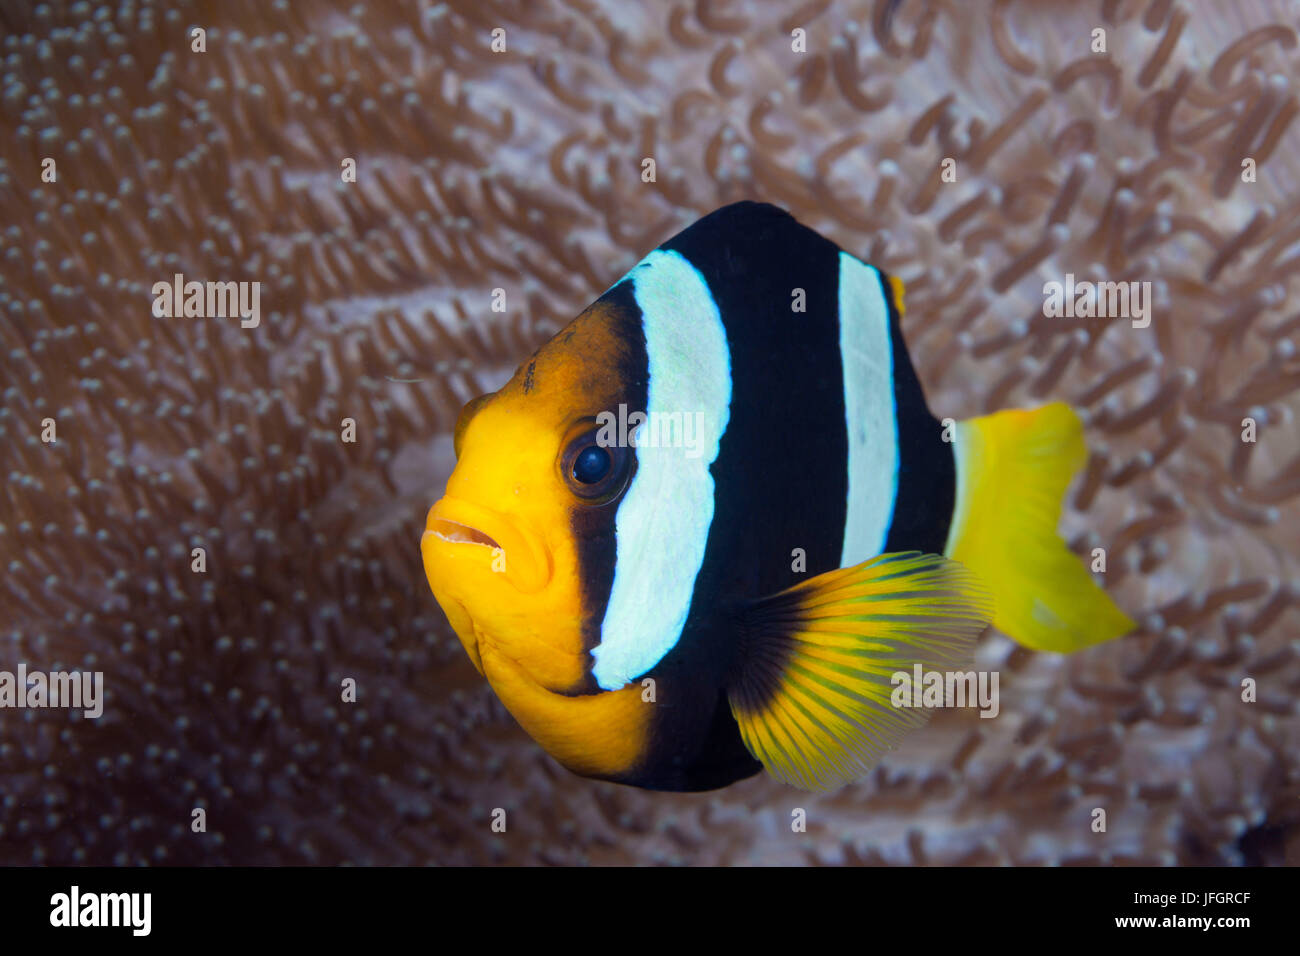 Clarks anemone fish, Amphiprion clarkii, Florida Islands, the Solomon Islands Stock Photo